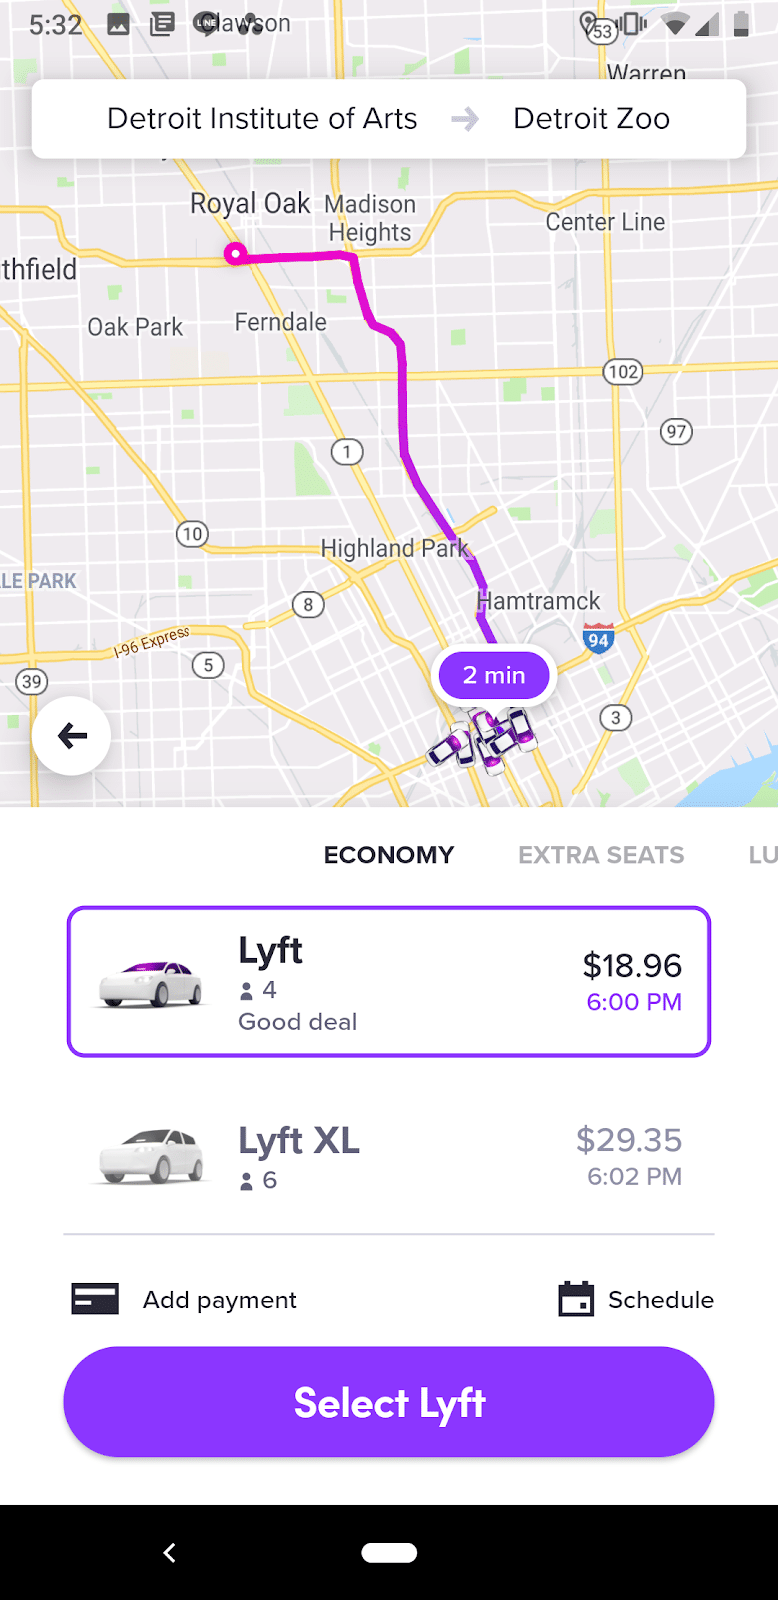 Price estimate for Lyft ride